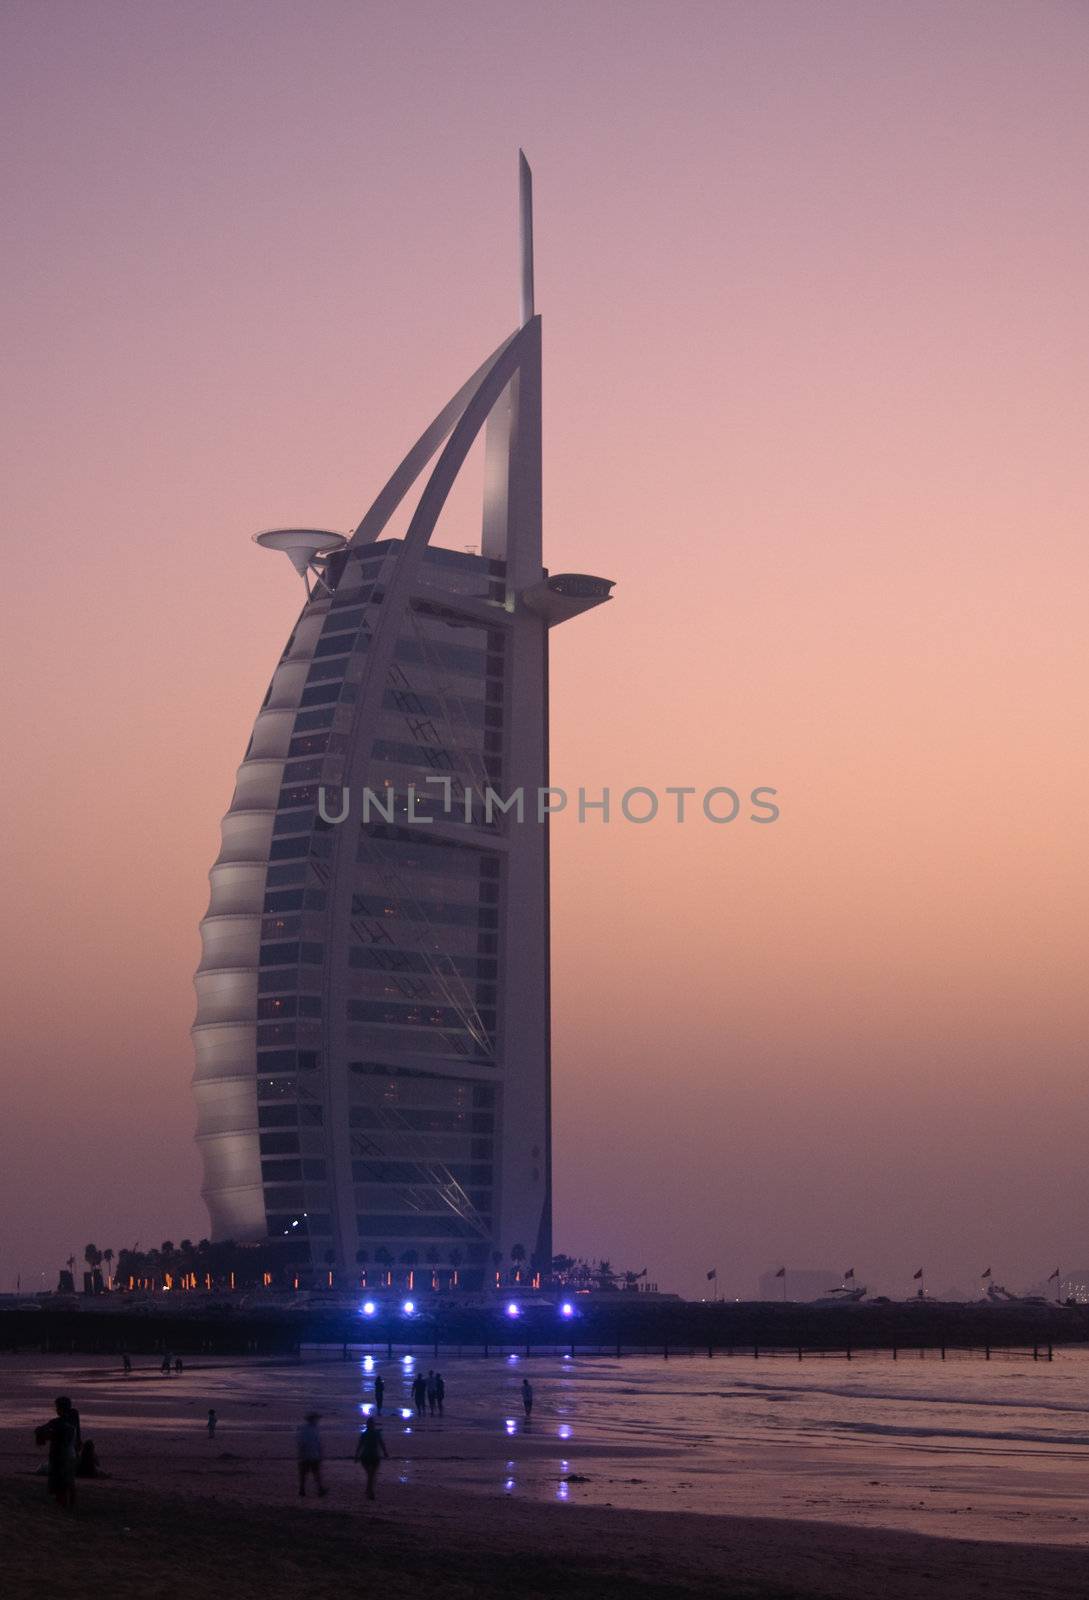 Burj al Arab Hotel in Dubai by steheap